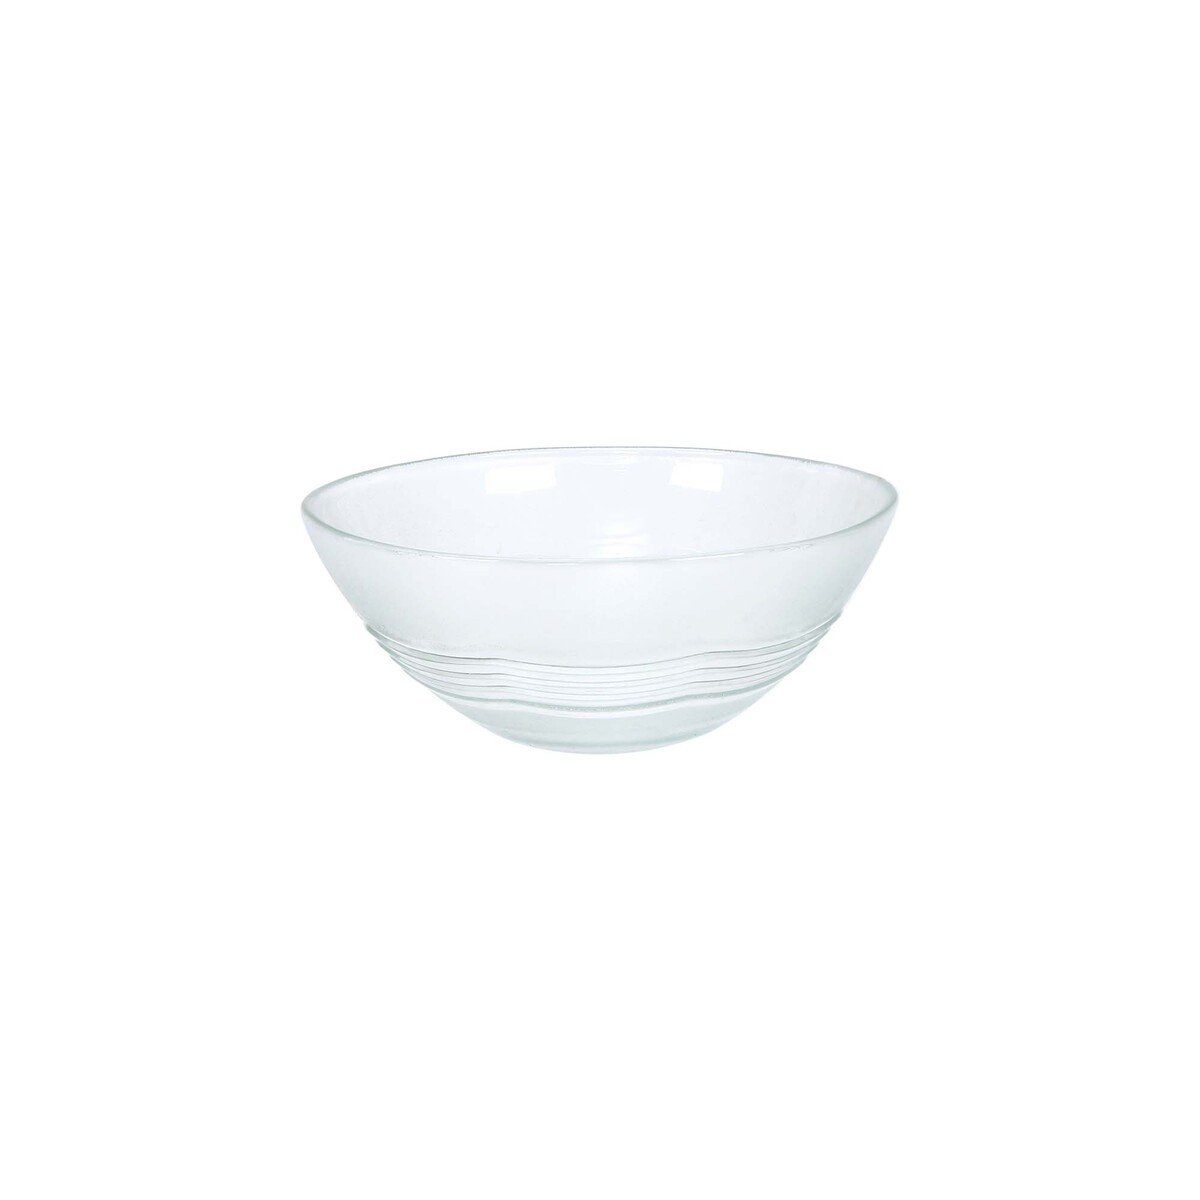 Migi Glass Bowl BW-508 12.8cm